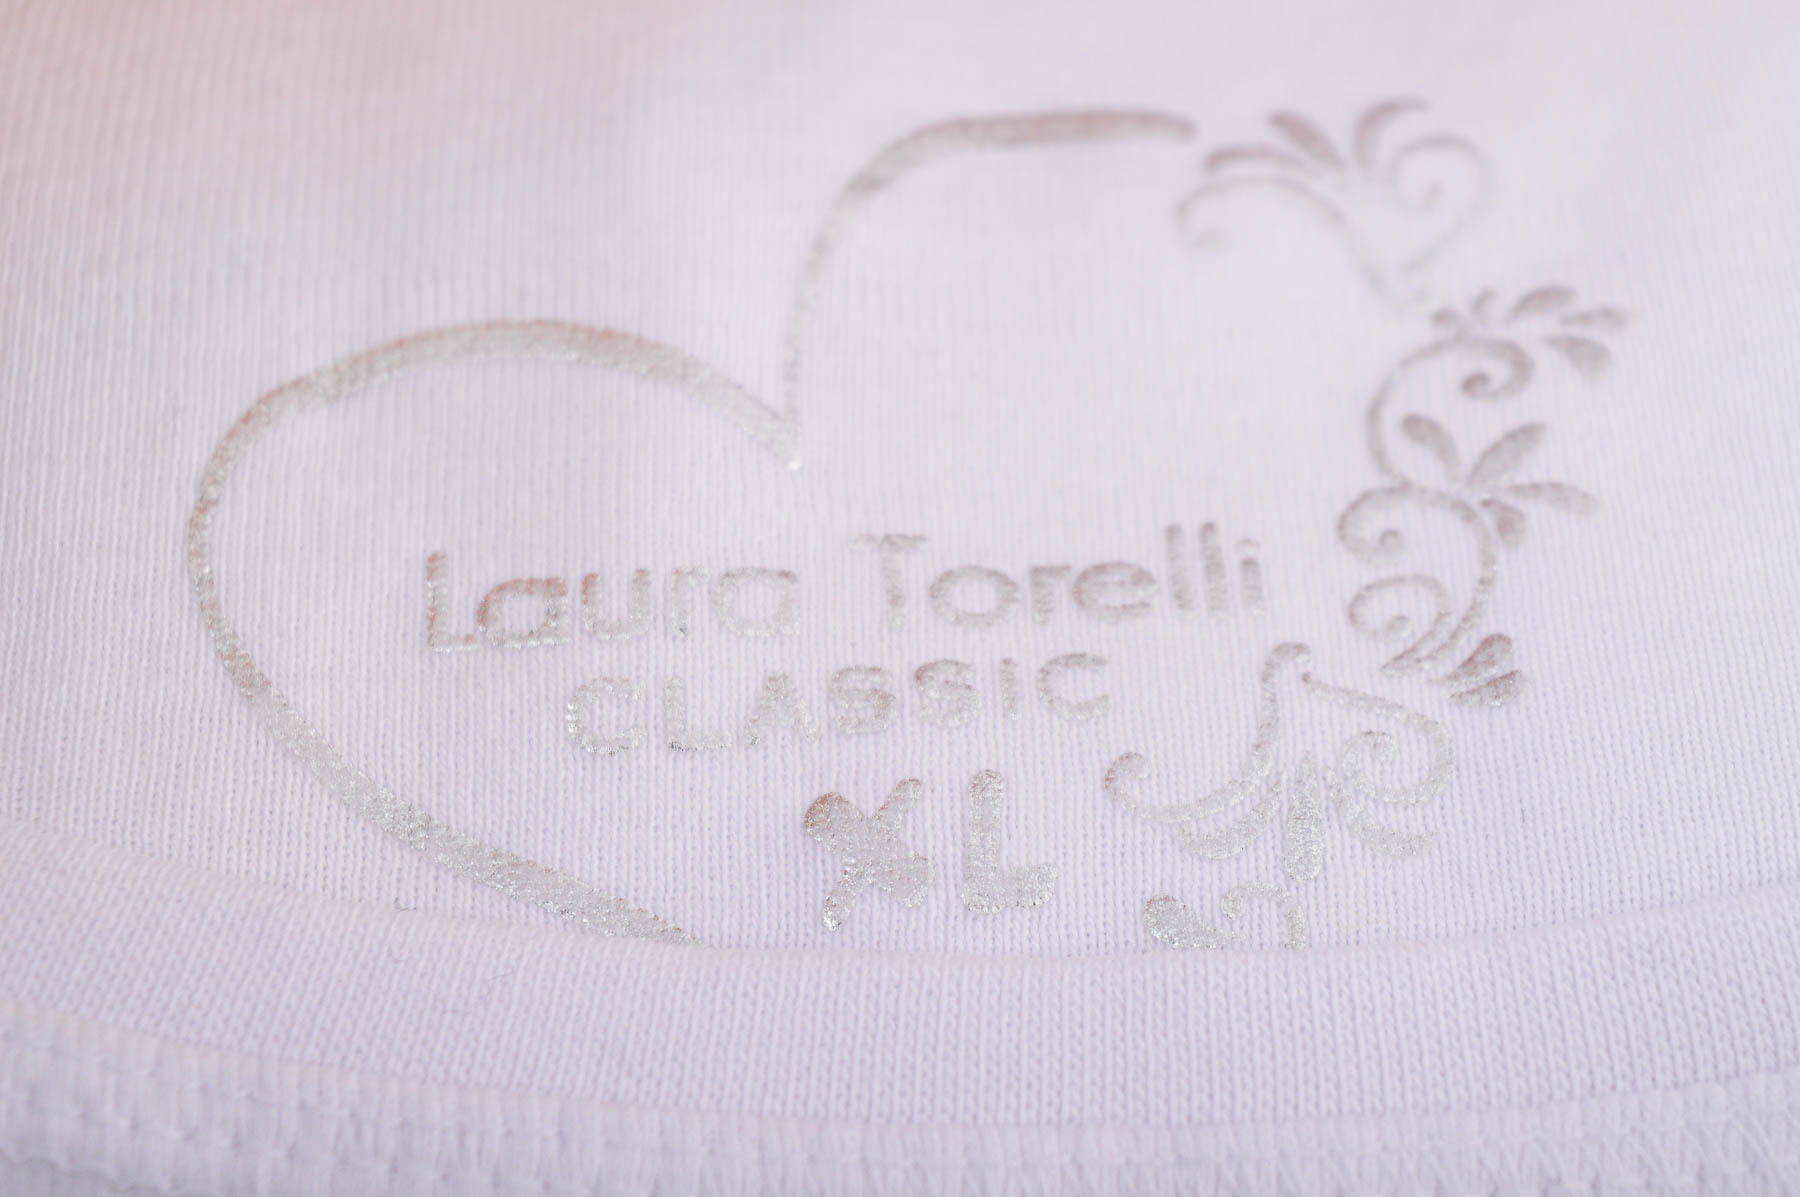 Women's t-shirt - Laura Torelli - 2